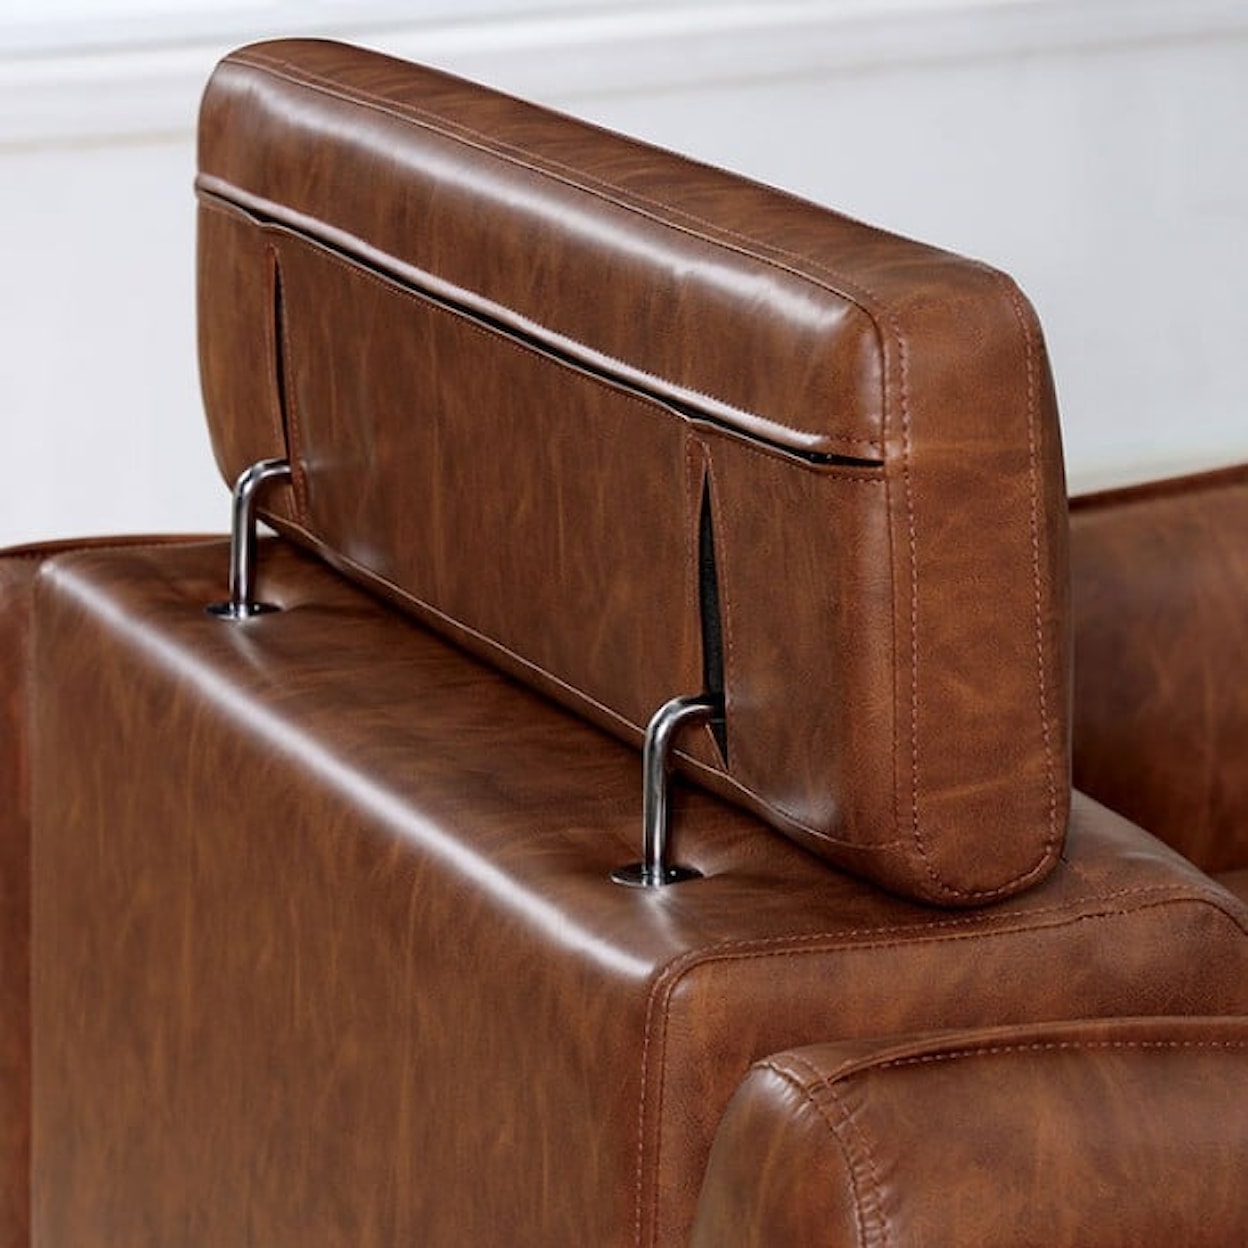 Furniture of America - FOA HOLMESTRAND Brown Chair